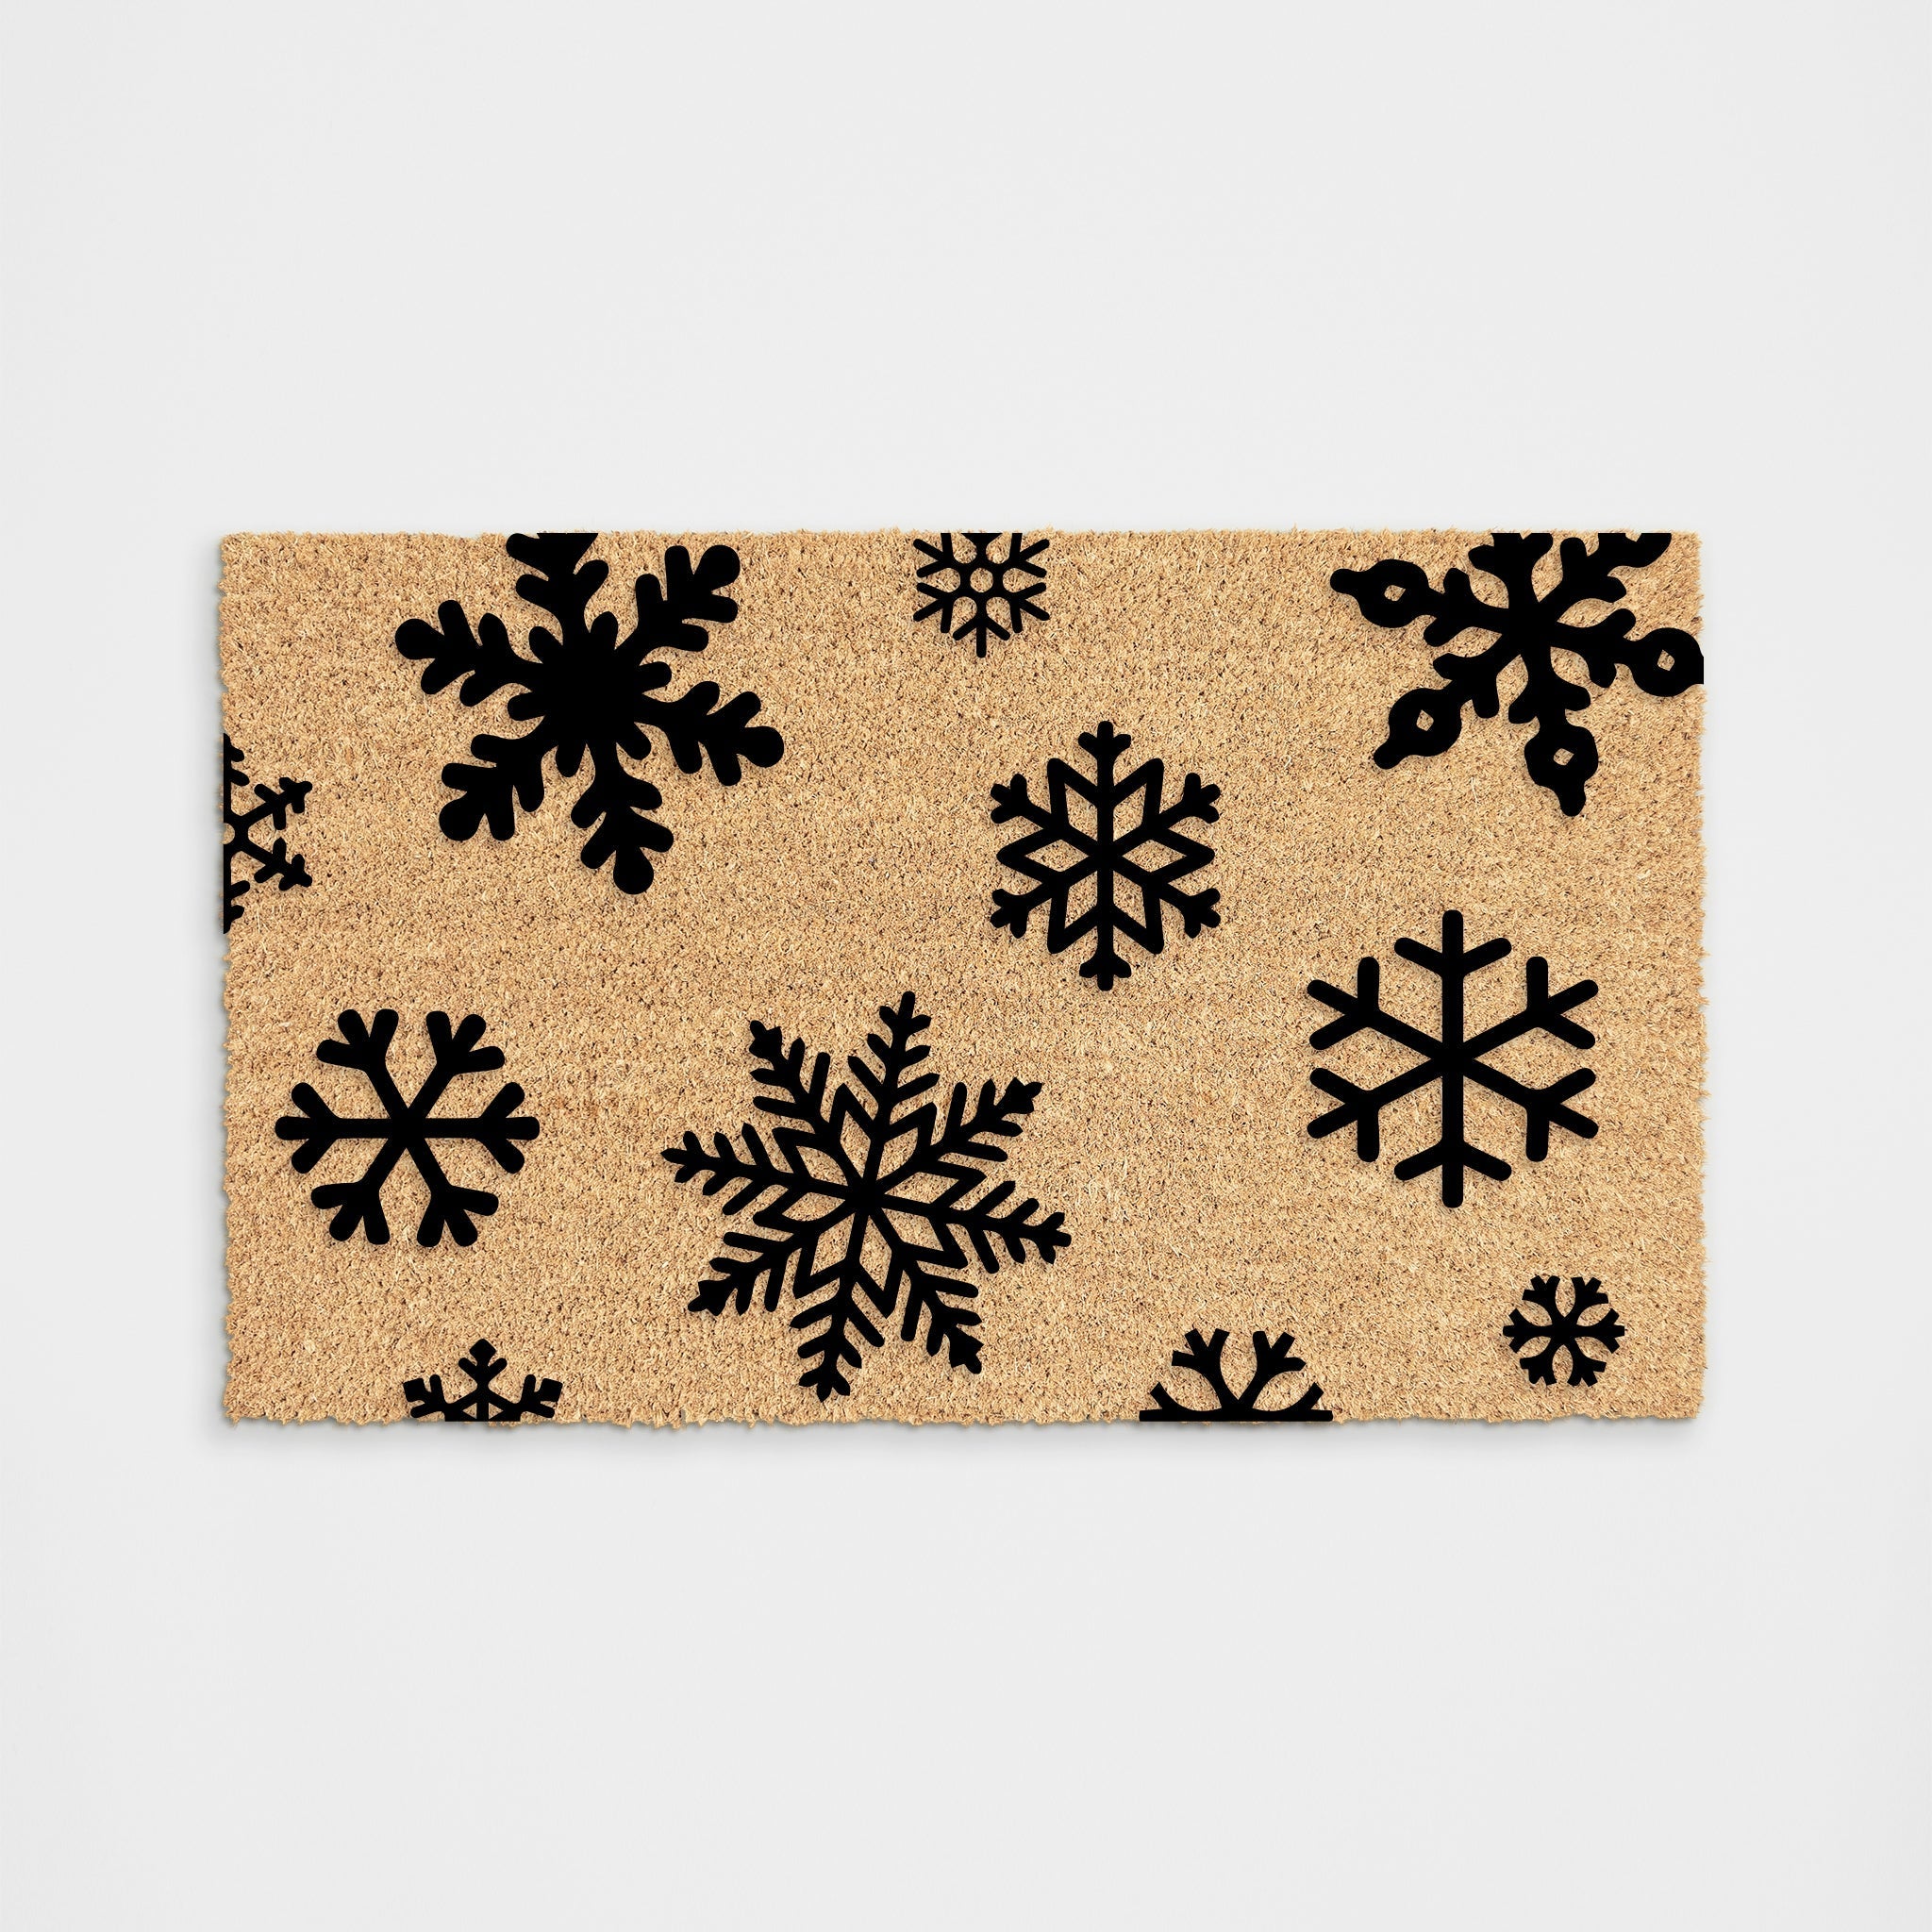 Neighburly Holiday Snowflake Doormat